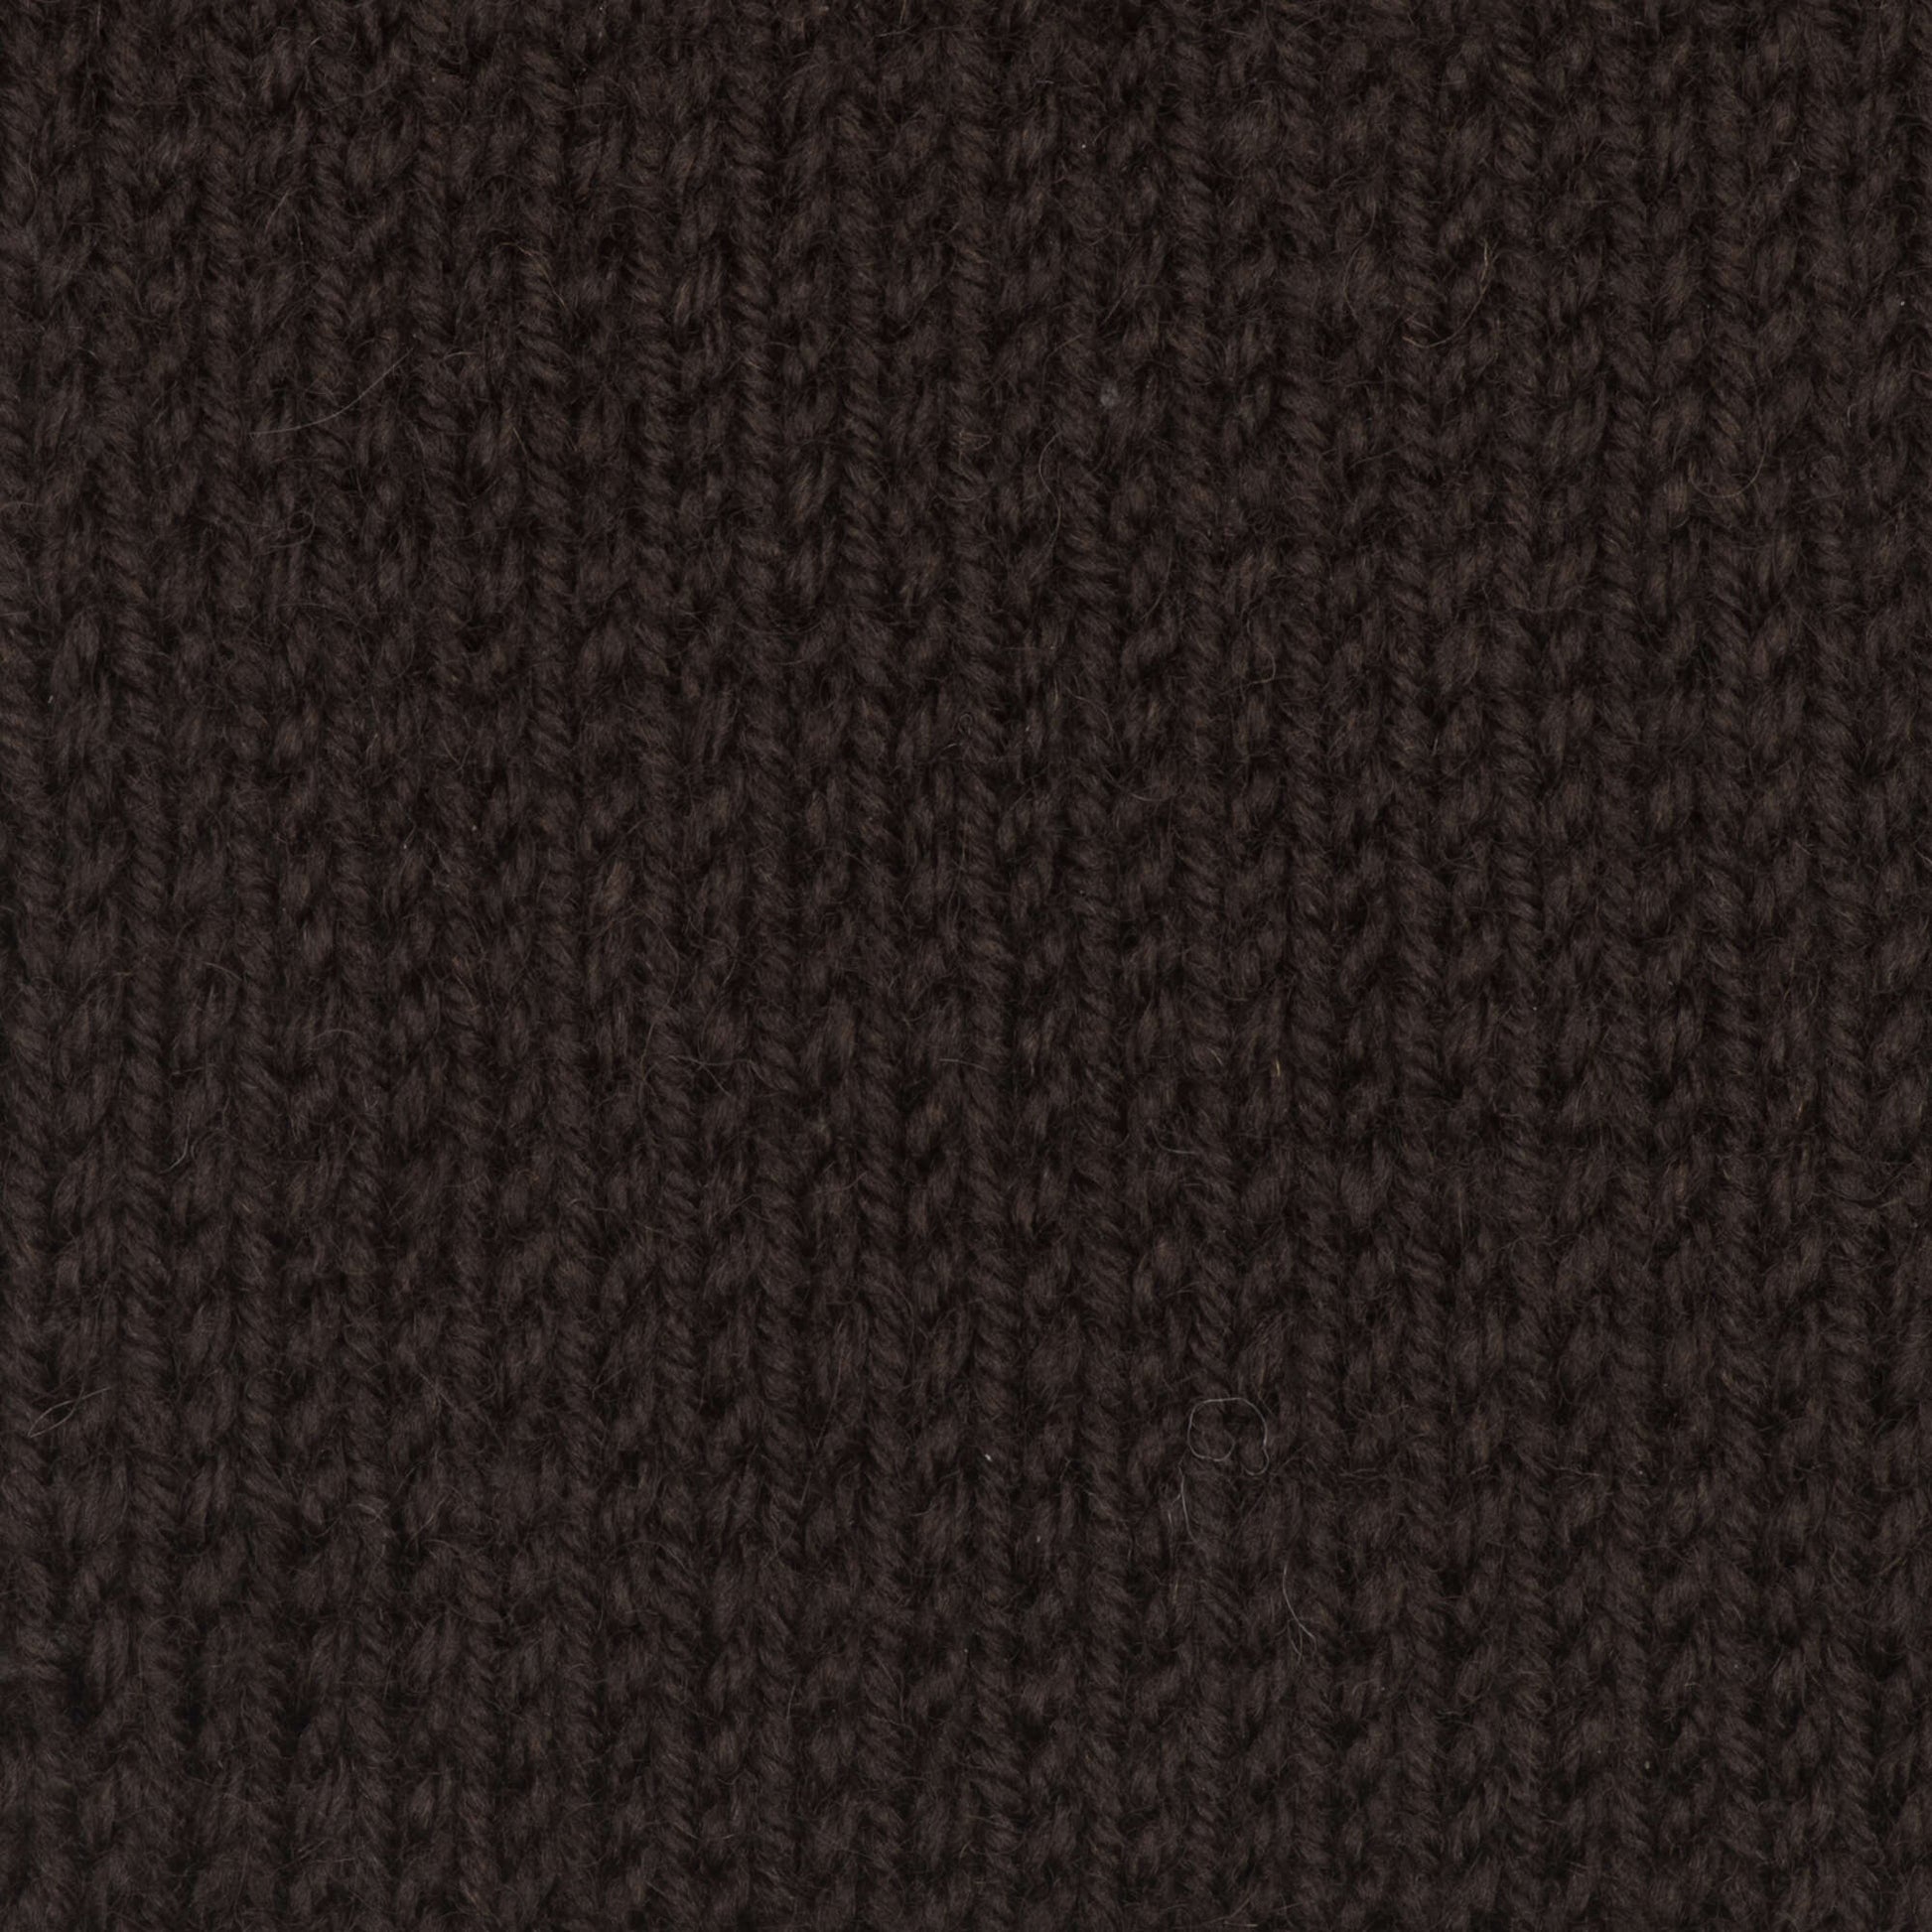 Patons Classic Wool DK Superwash Yarn - Discontinued Shades Mocha